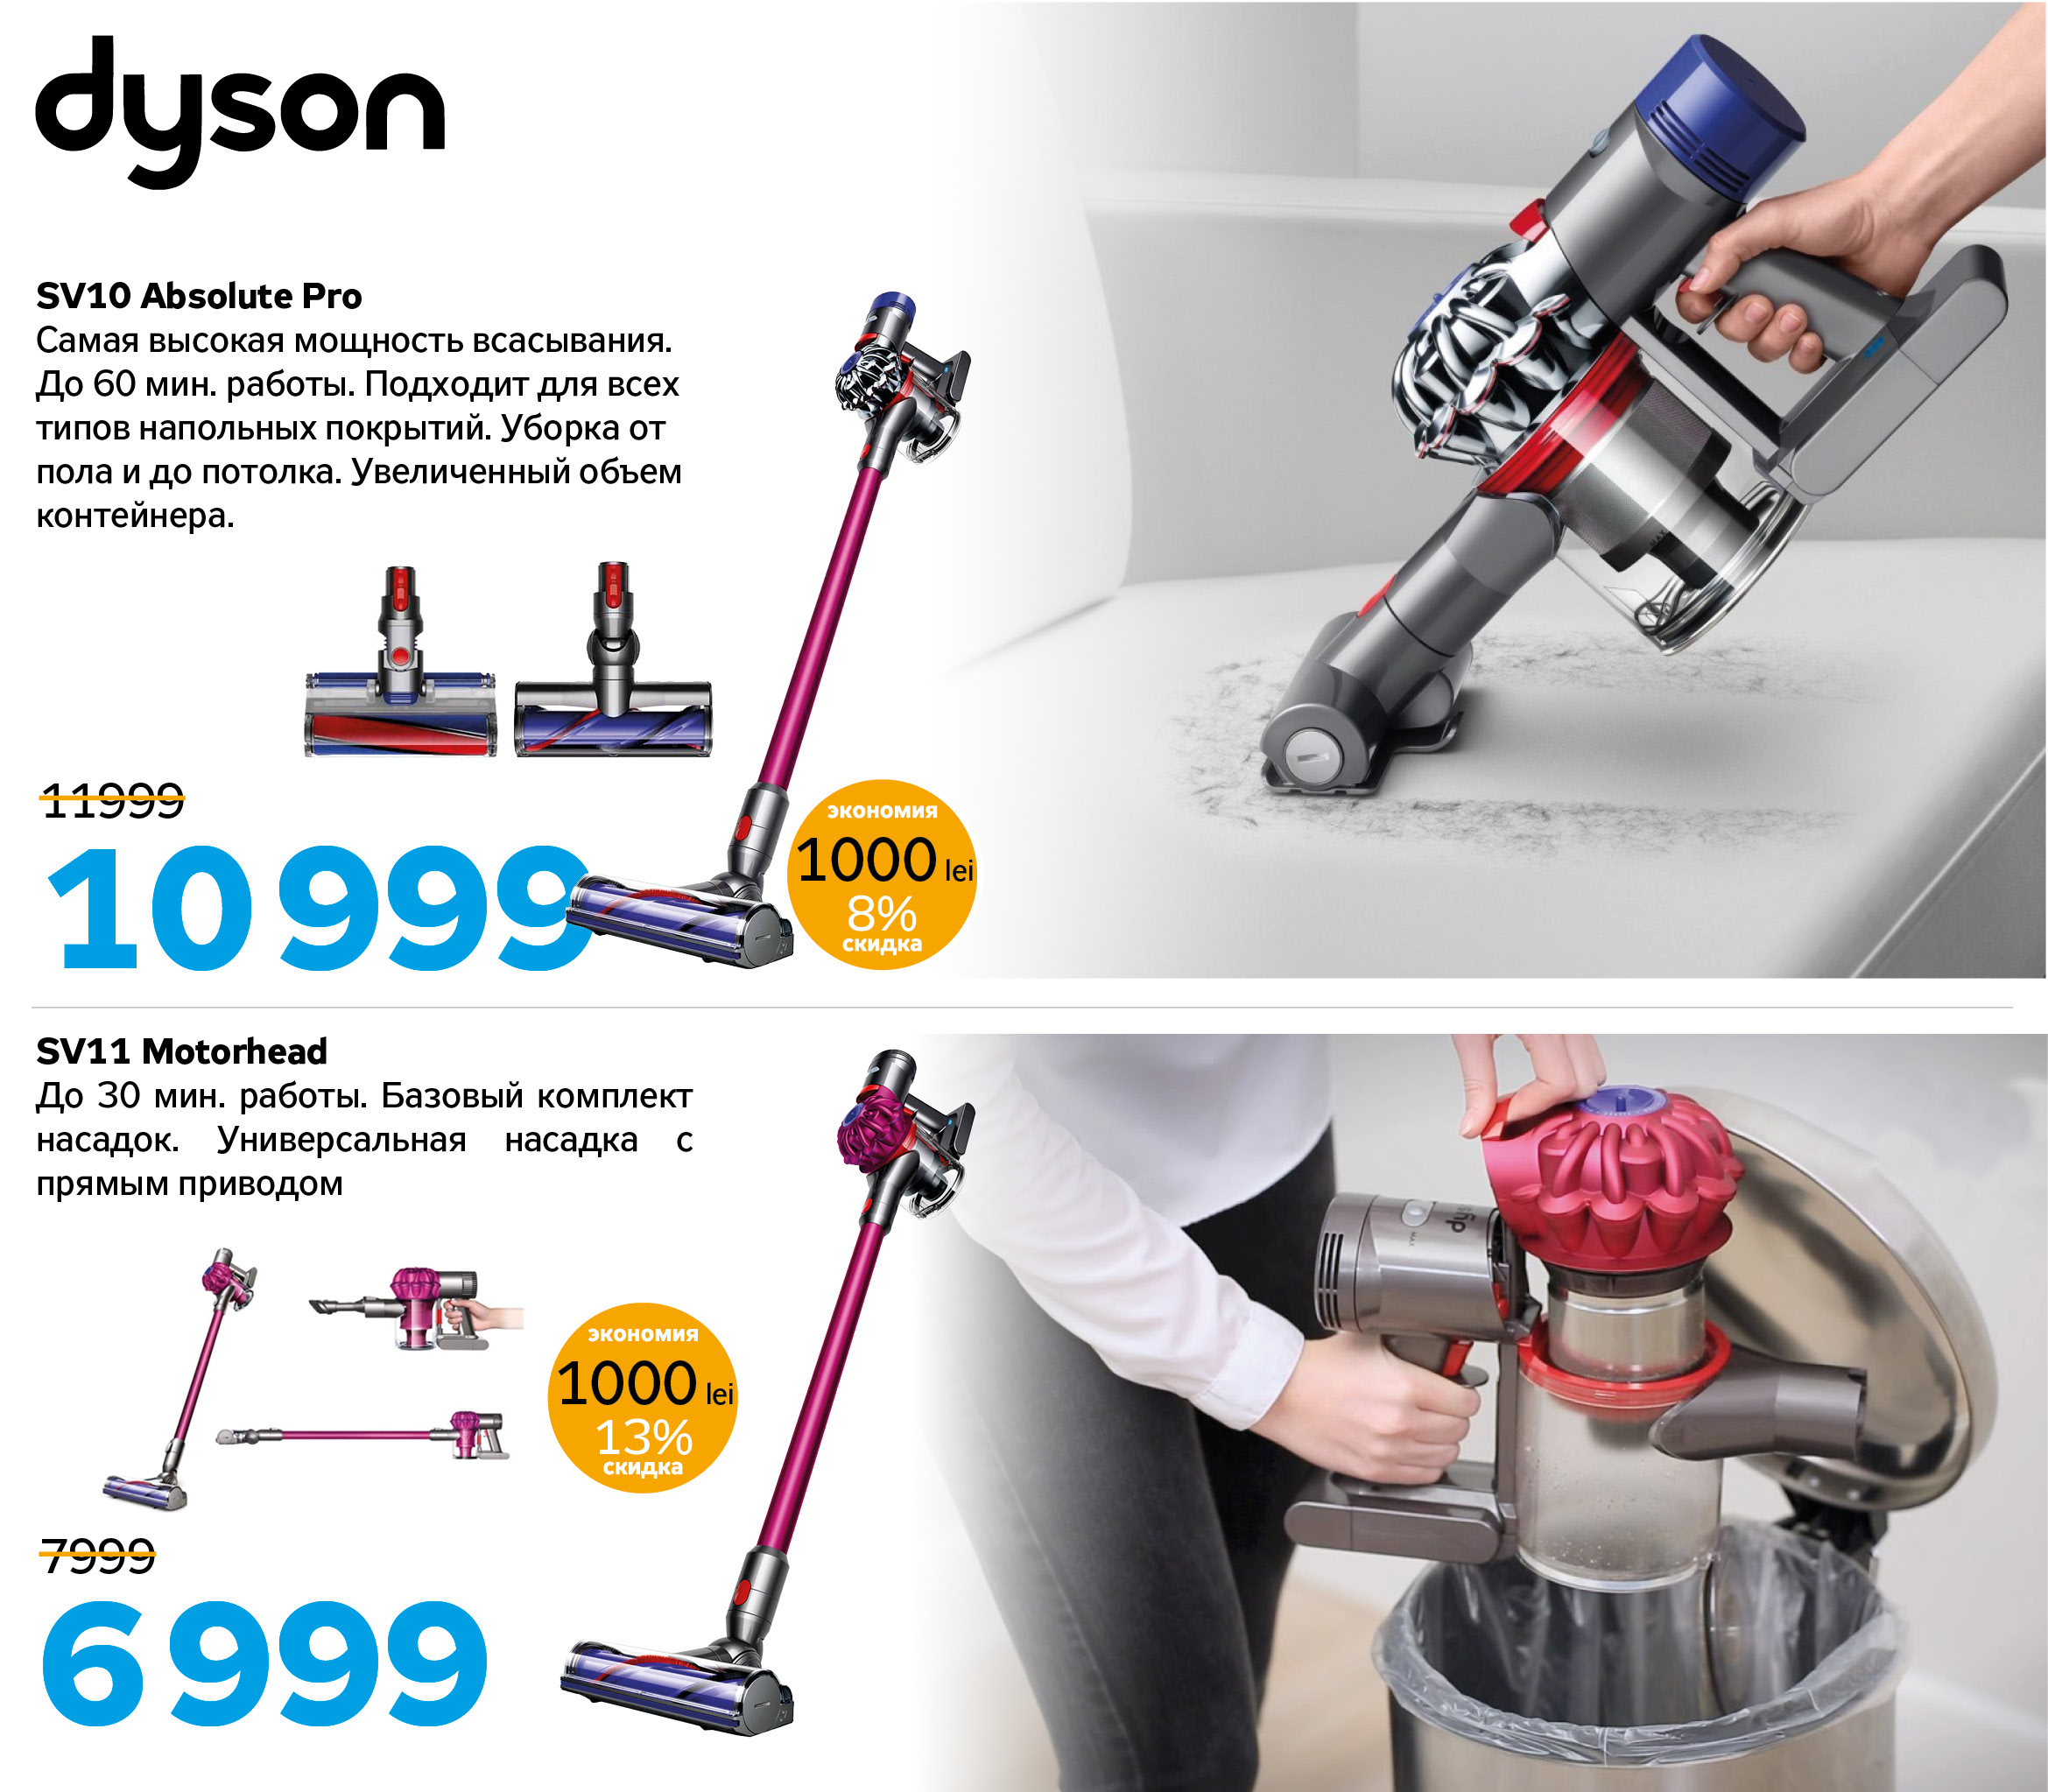 Реклама дайсон. Dyson реклама. Dyson баннер. Дайсон слоган. Слоган пылесосов Dyson.